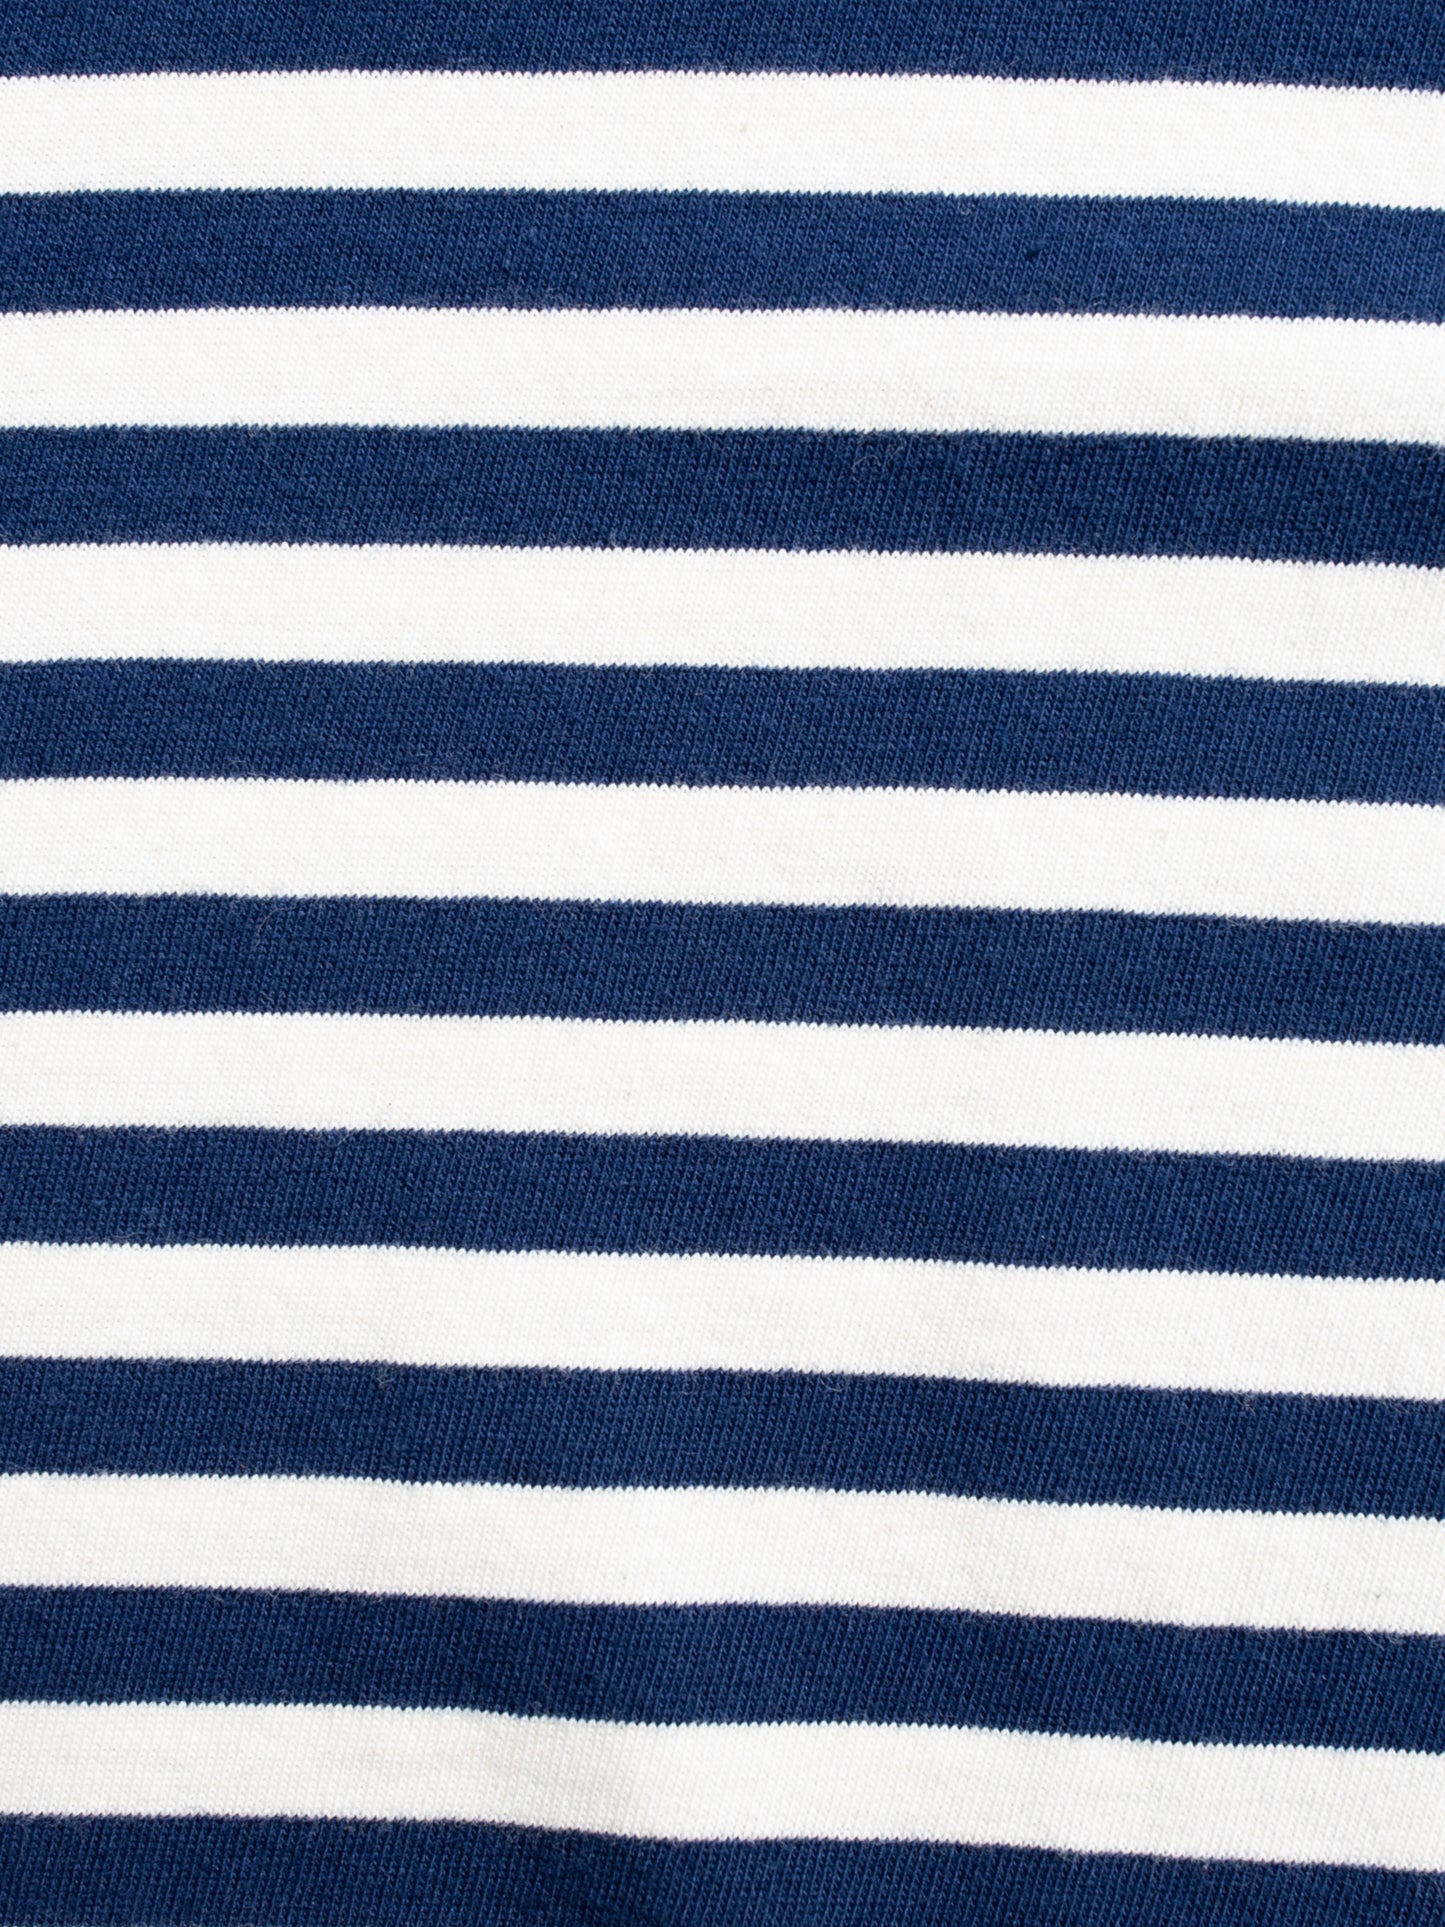 Nudie Jeans Leif Breton Stripe Tee Offwhite/Blue